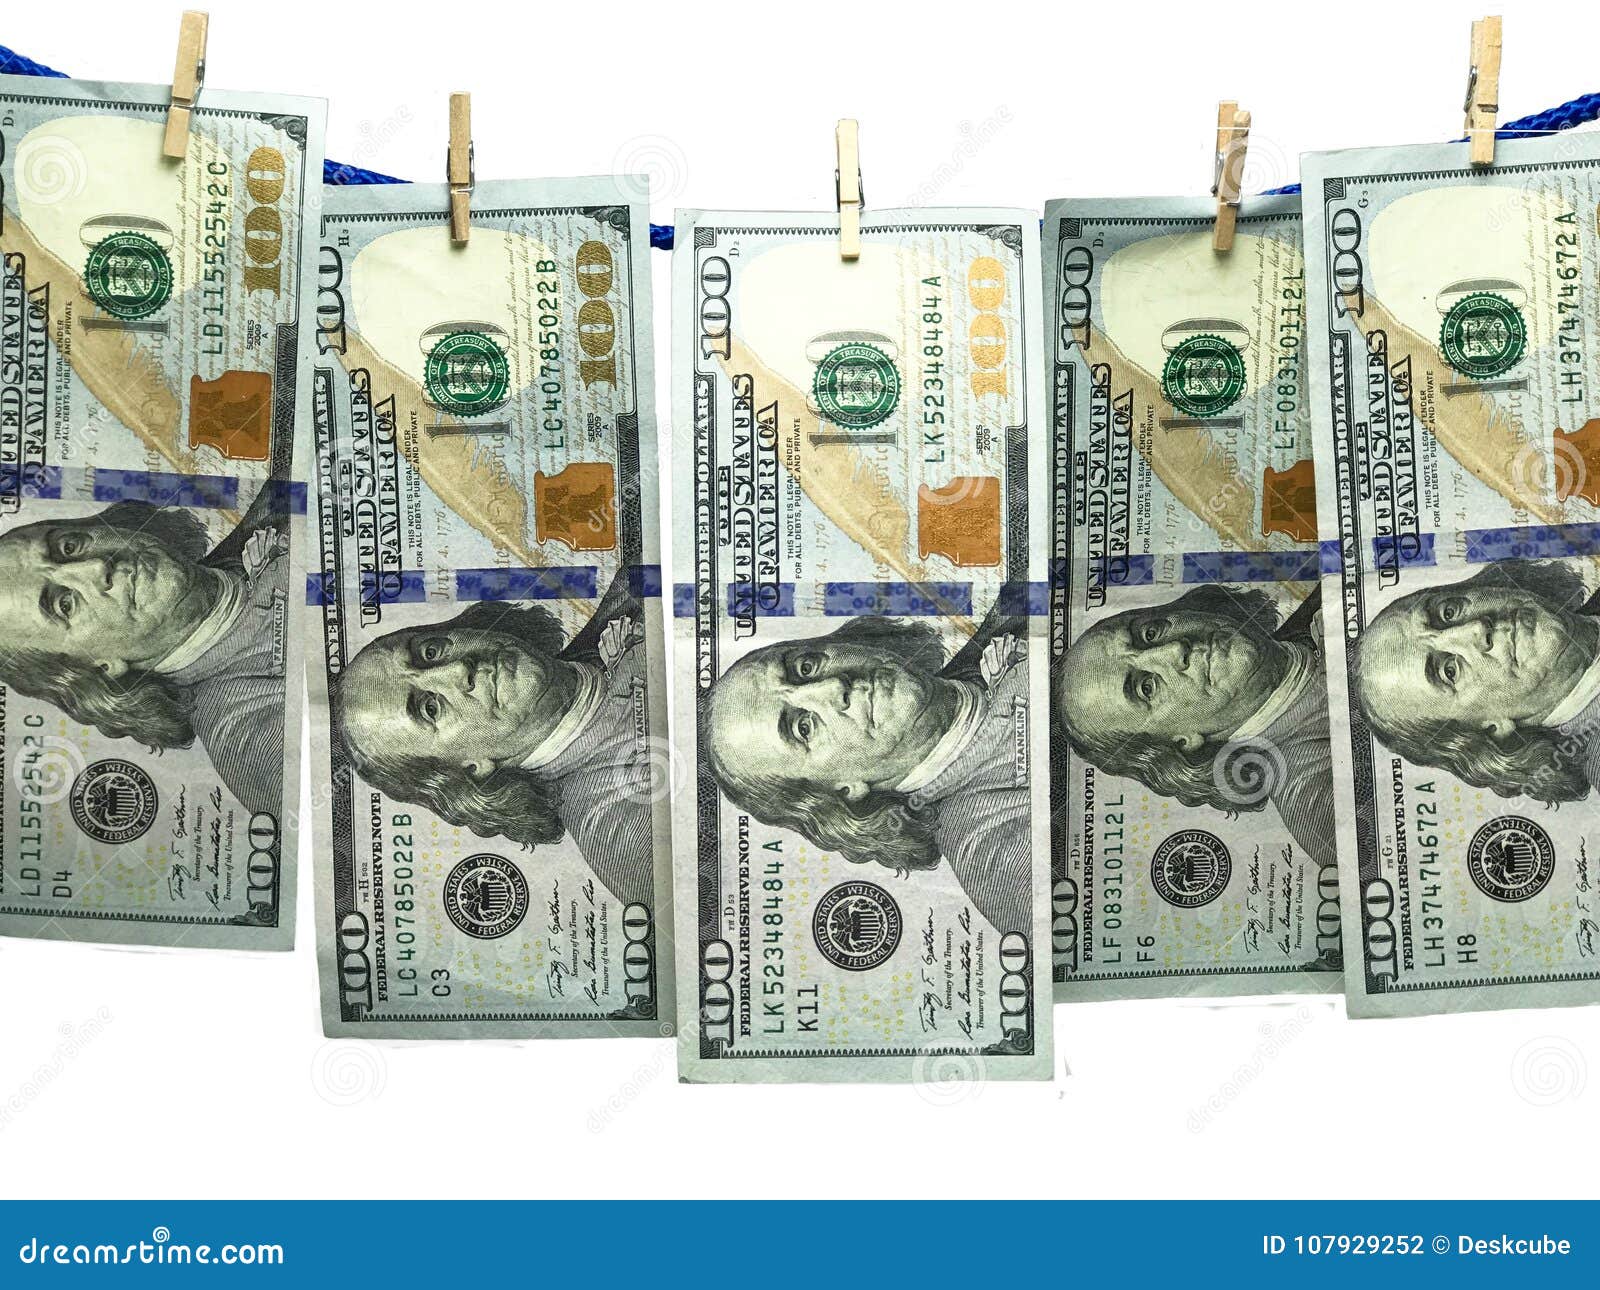 money laundering concept. photo image